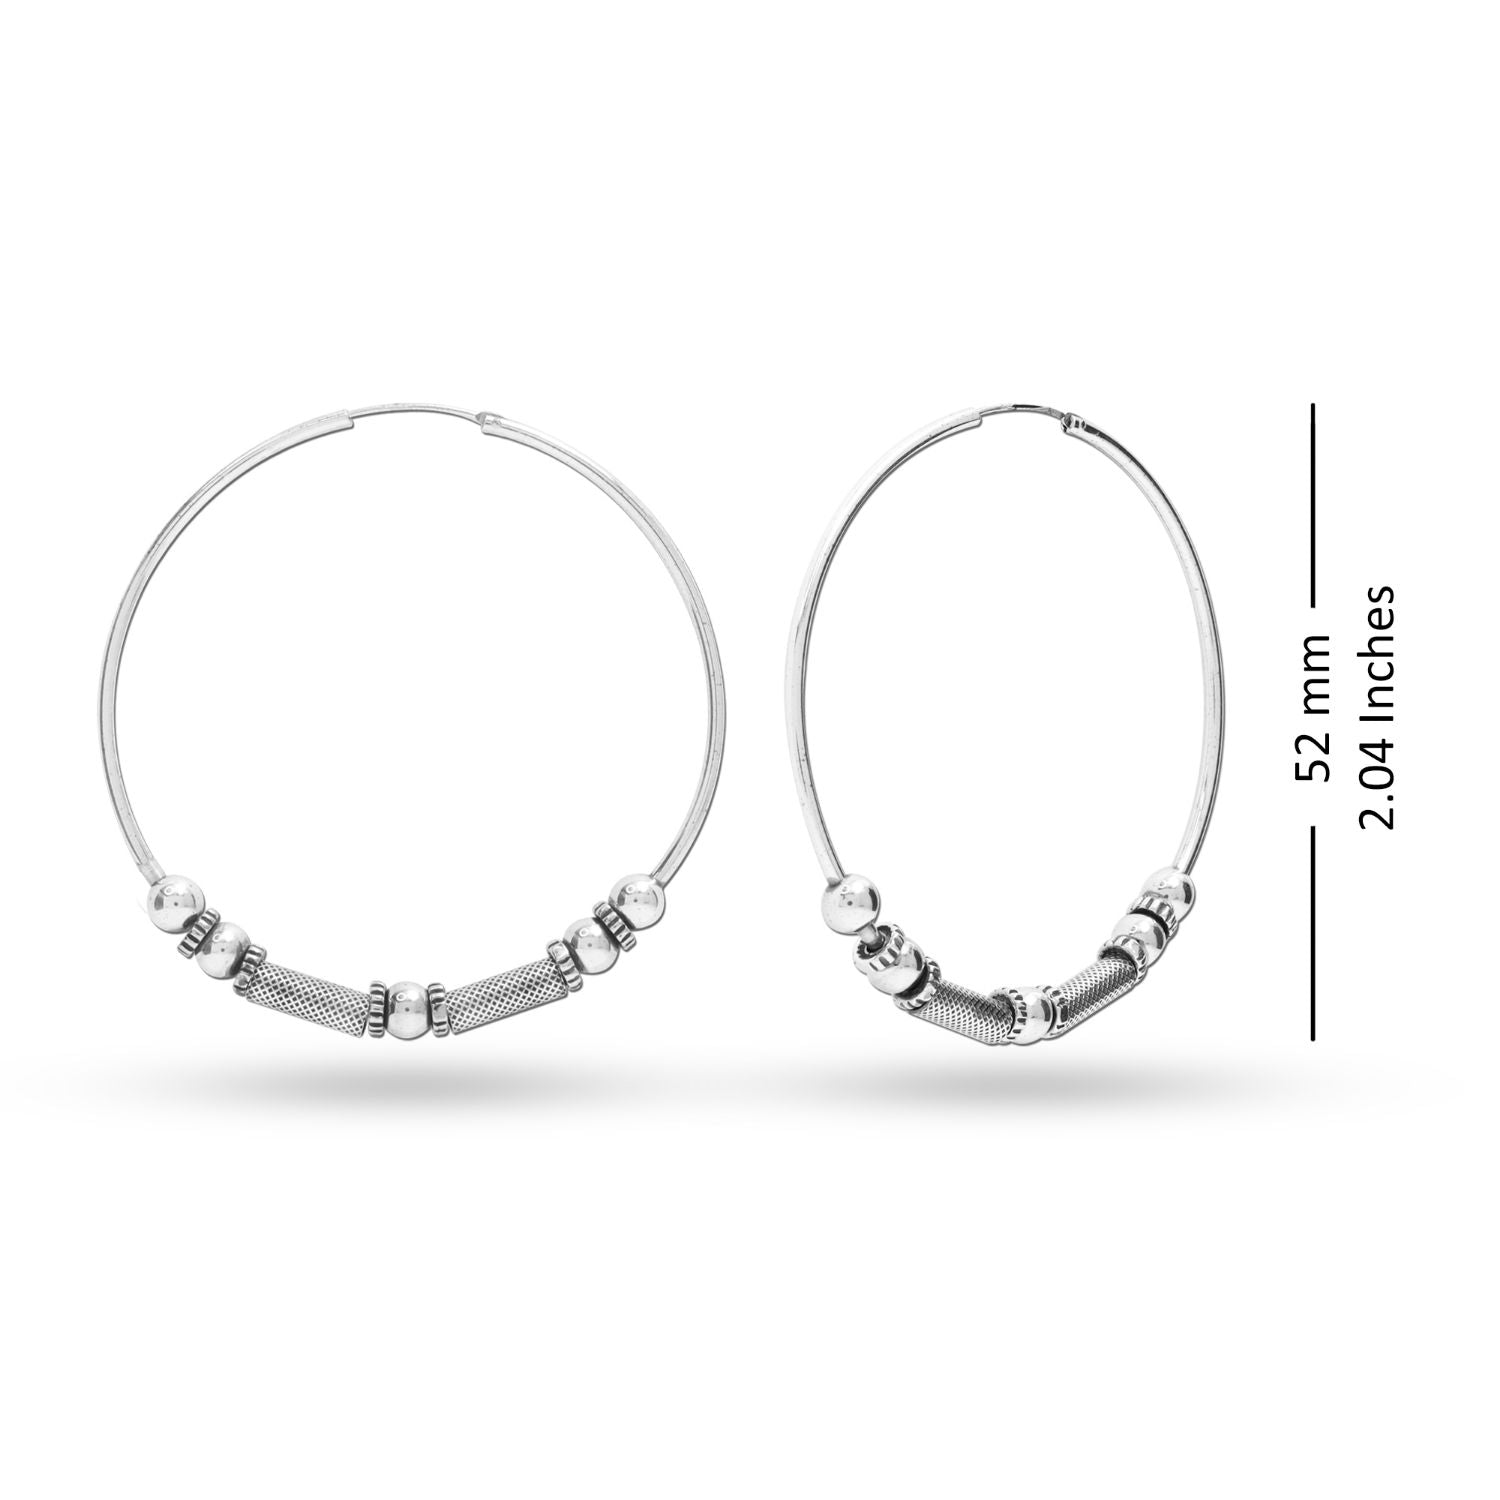 925 Sterling Silver Beads Bali Design Hoop Earrings for Teen Women